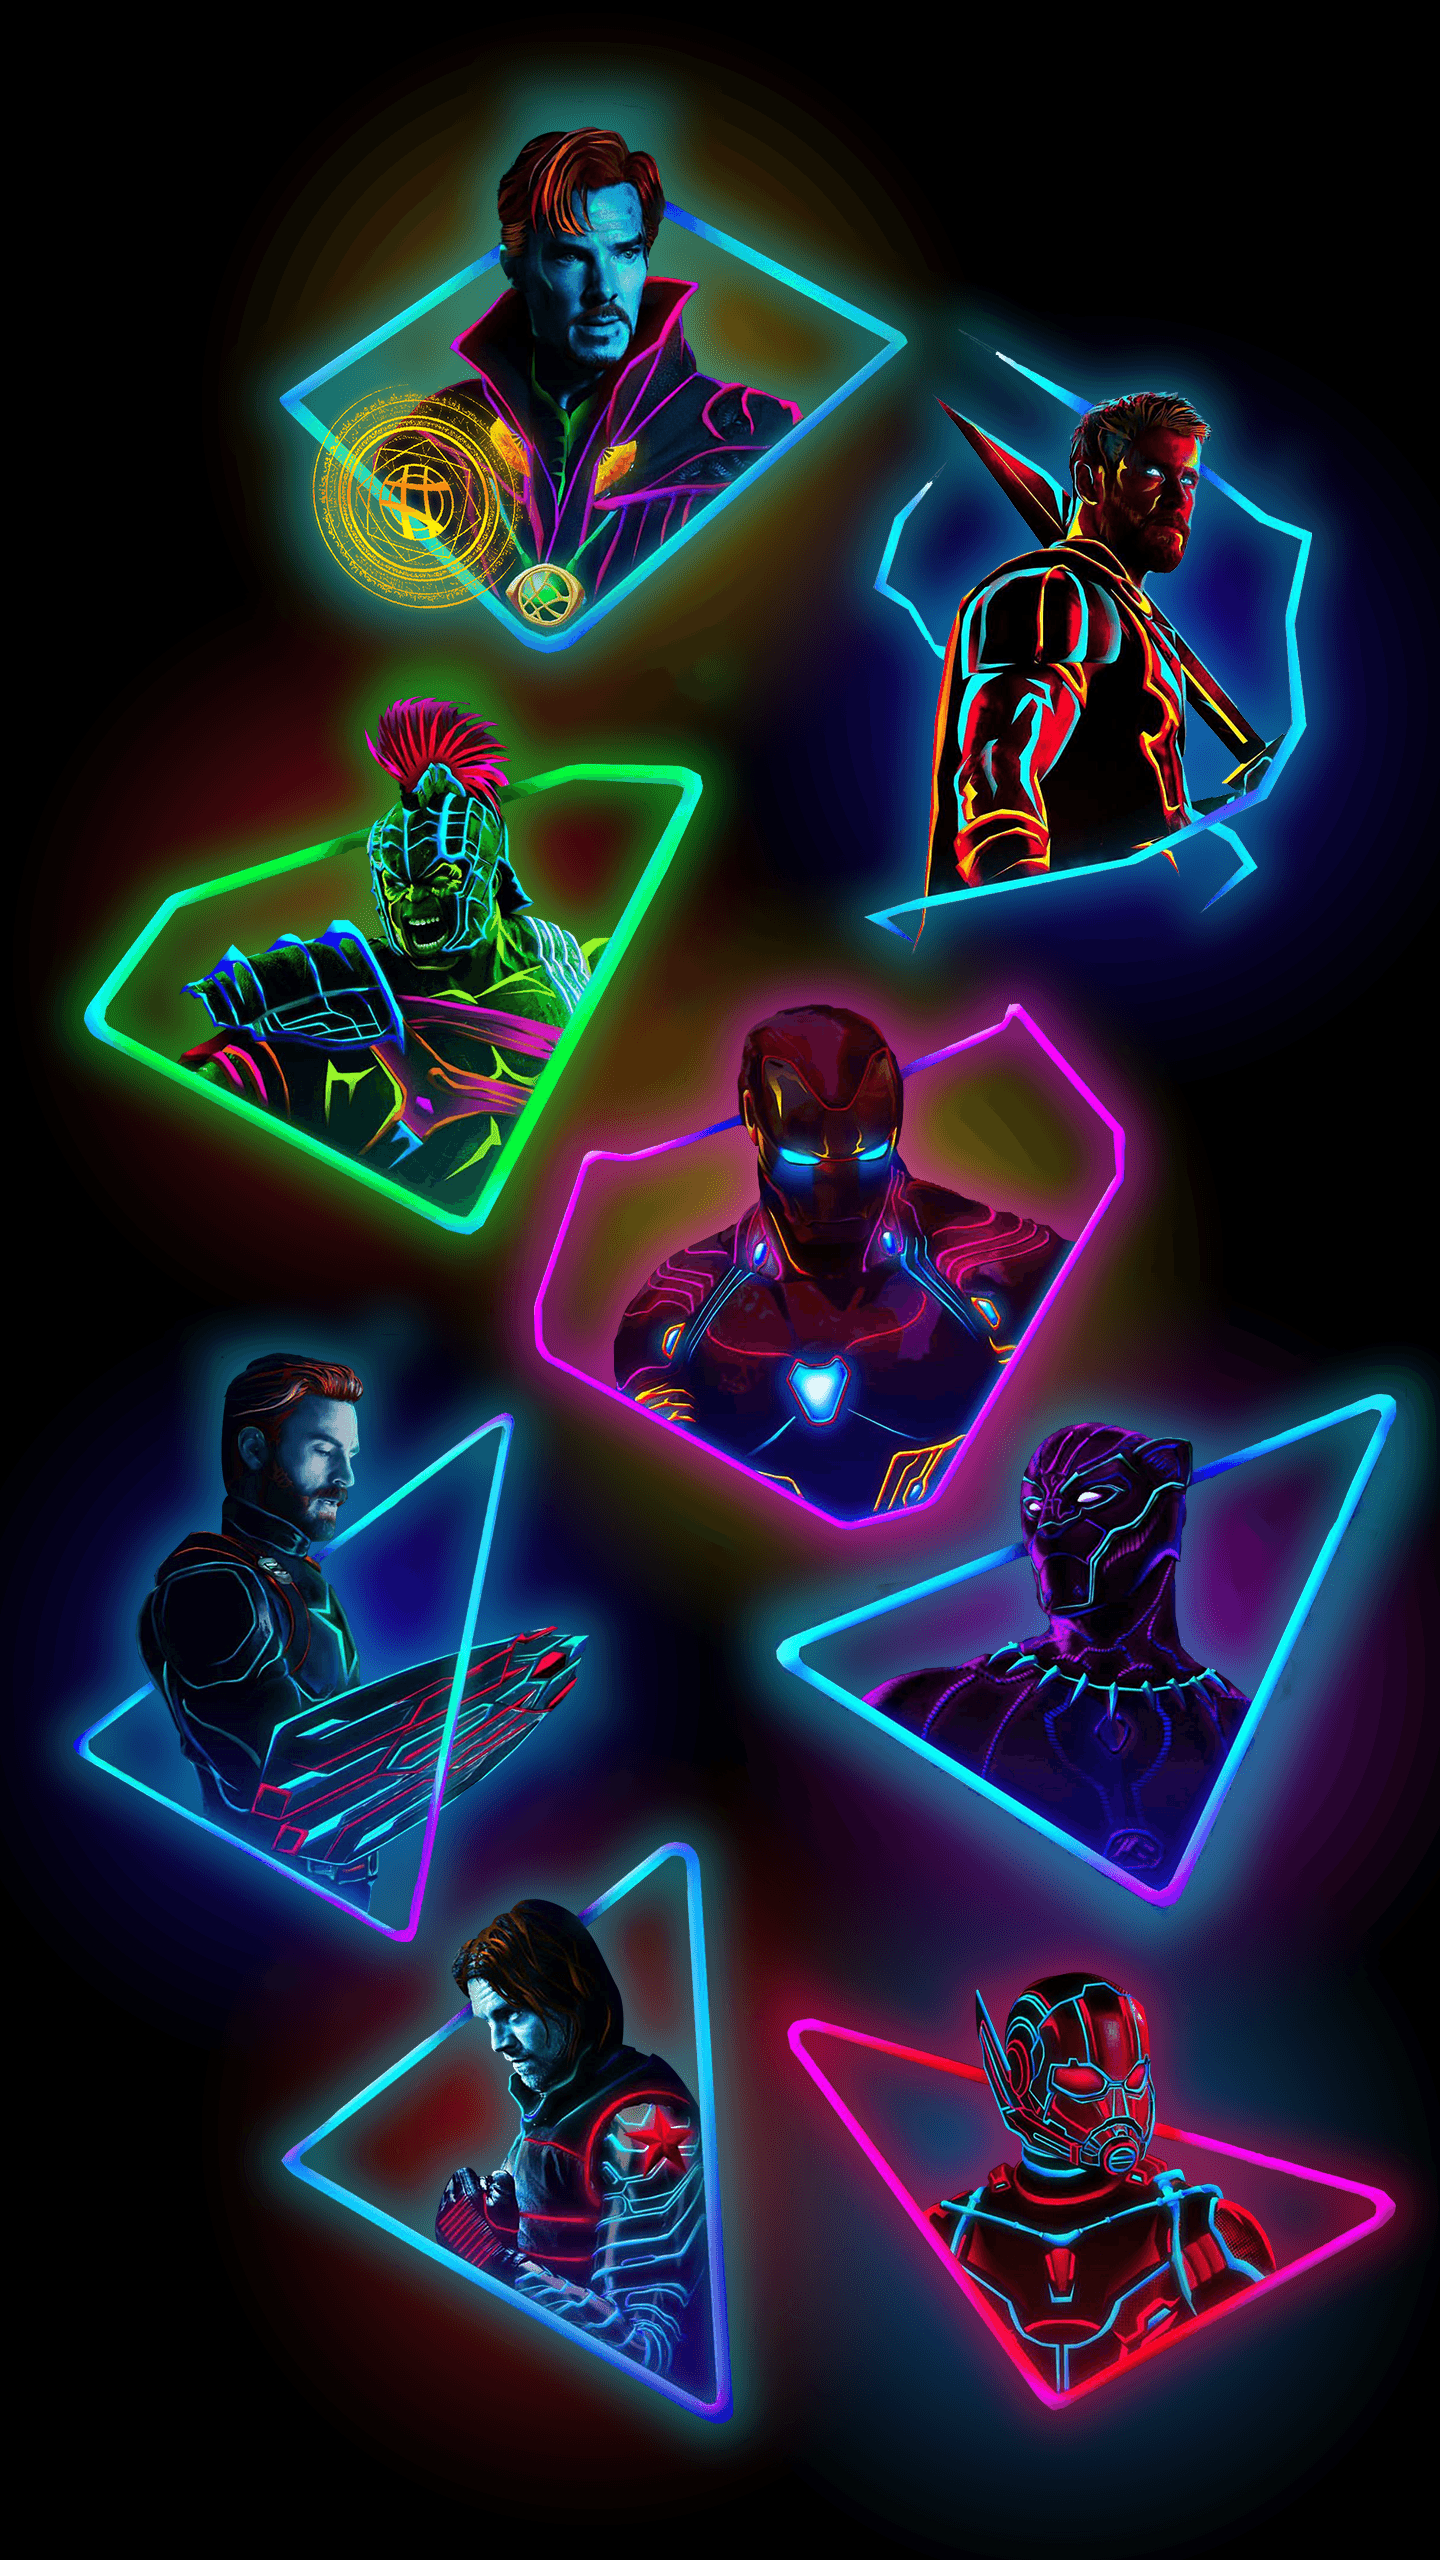 Neon Marvel edit (original art by Aniket Jatav)